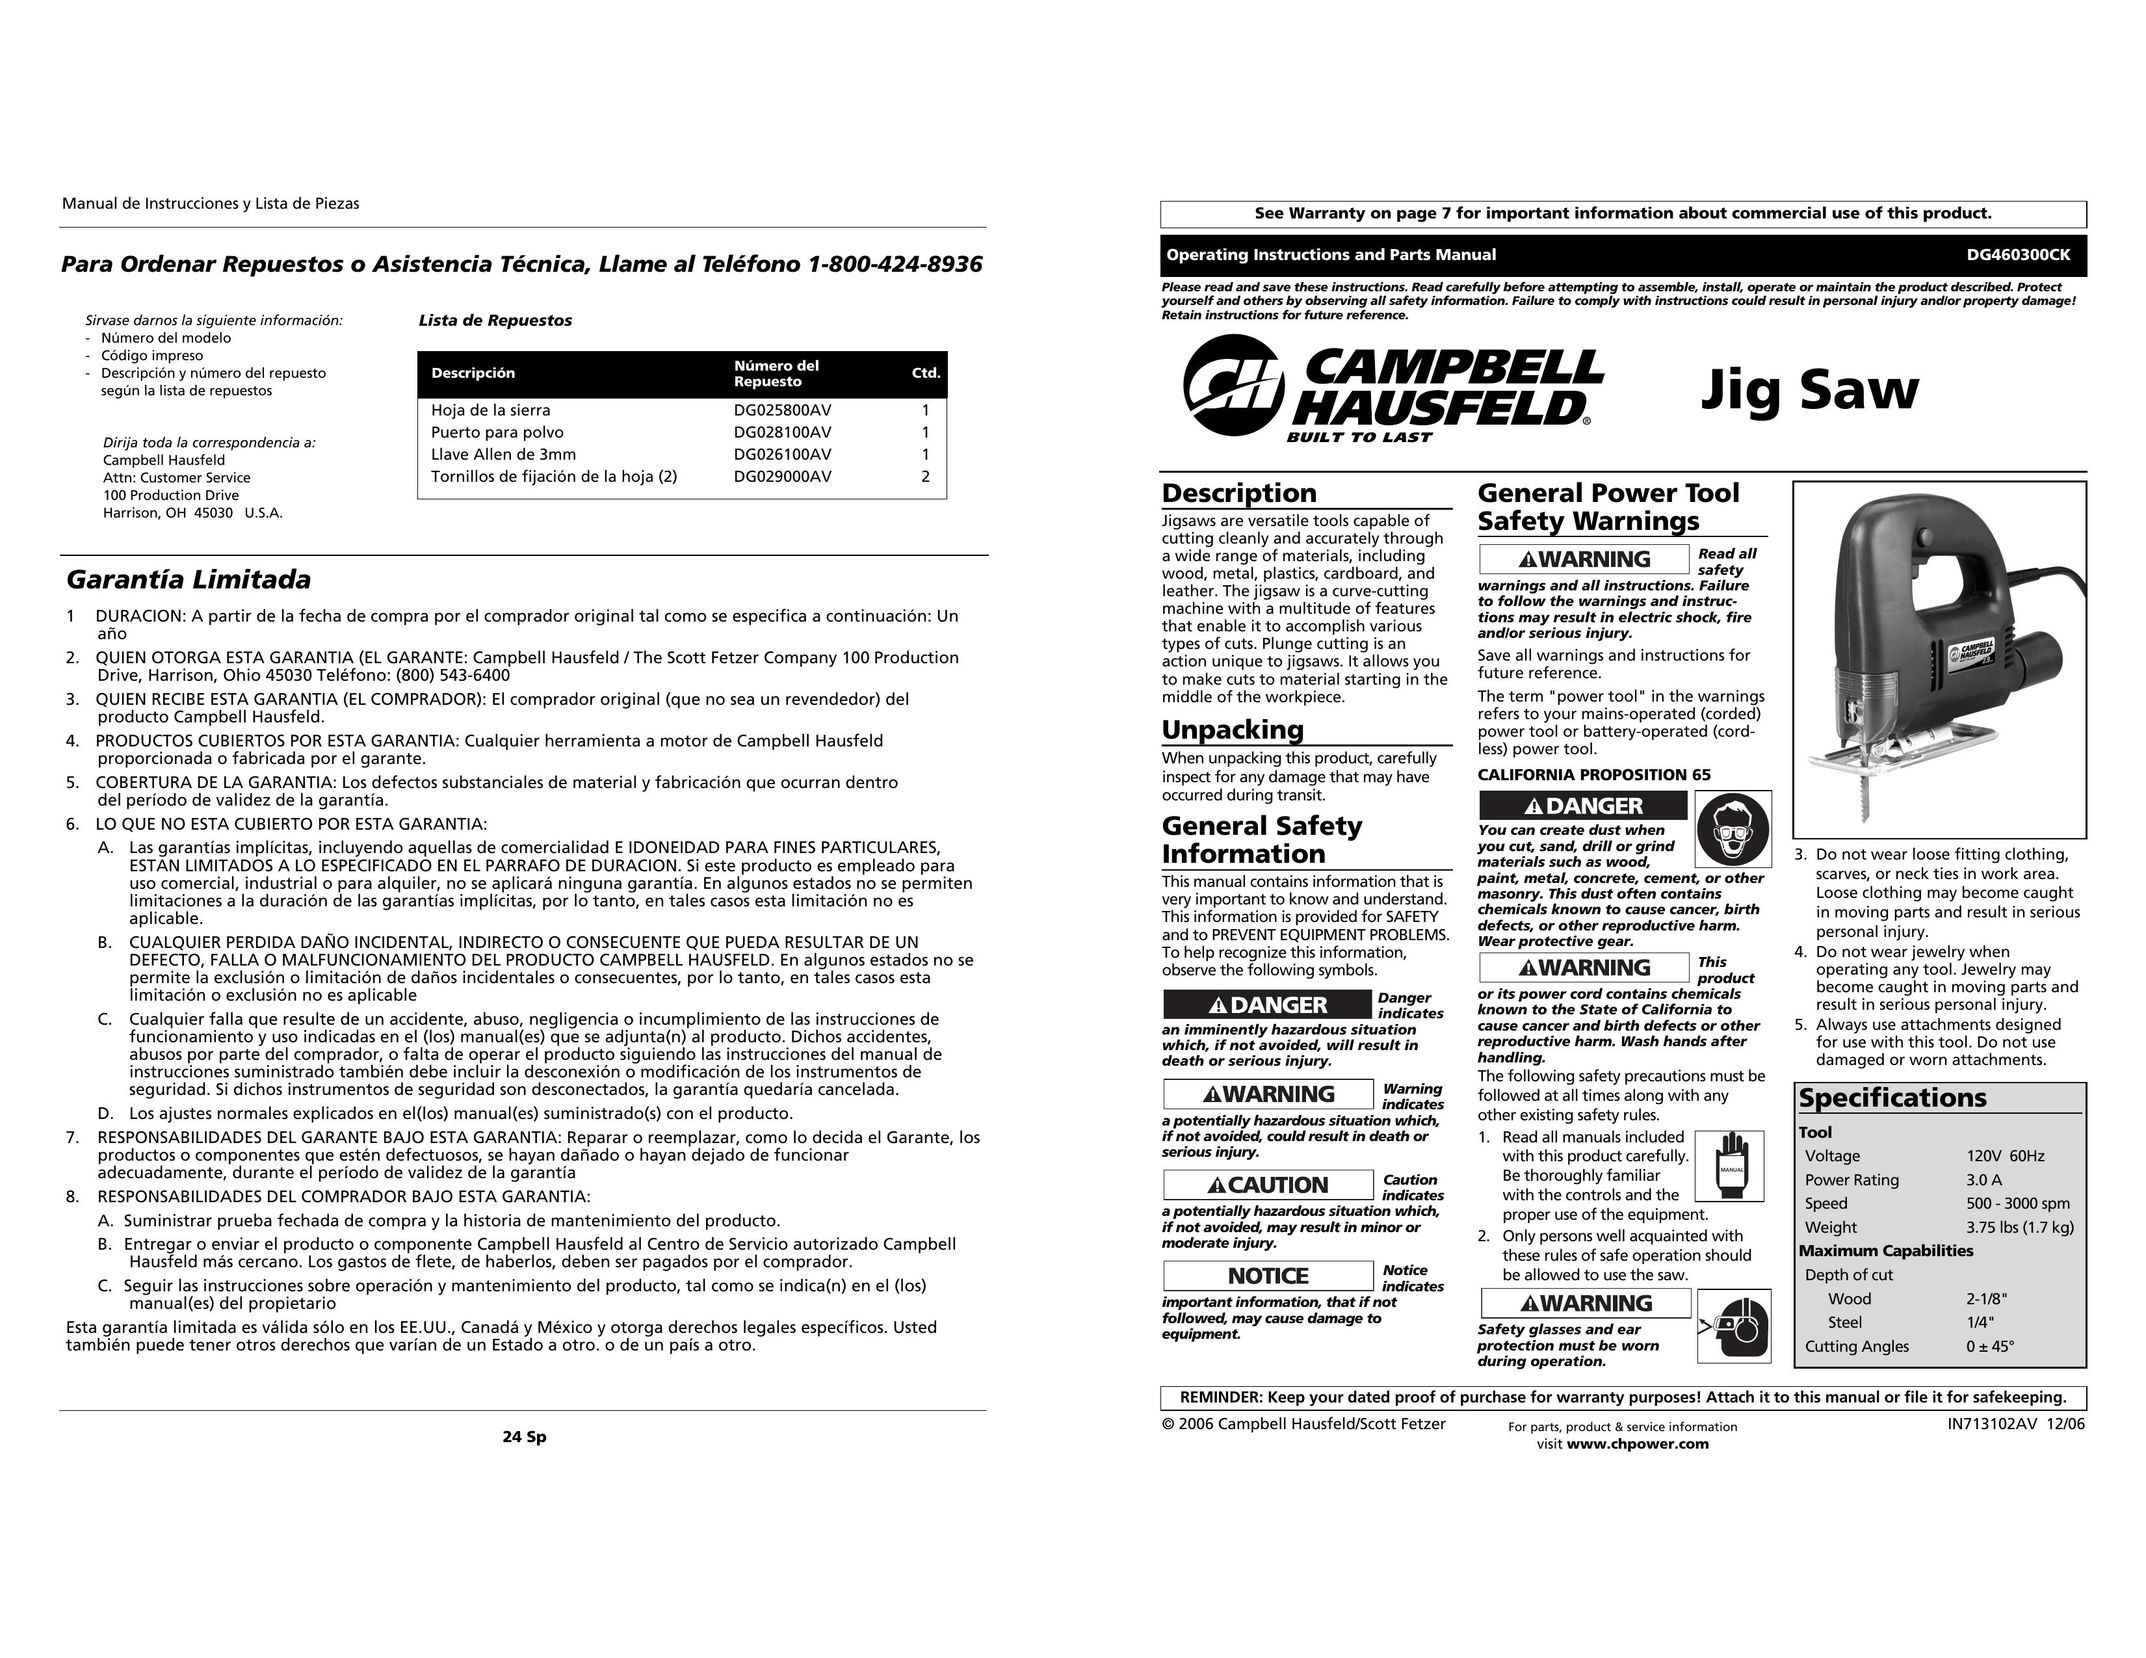 Campbell Hausfeld DG460300CK S Microcassette Recorder User Manual